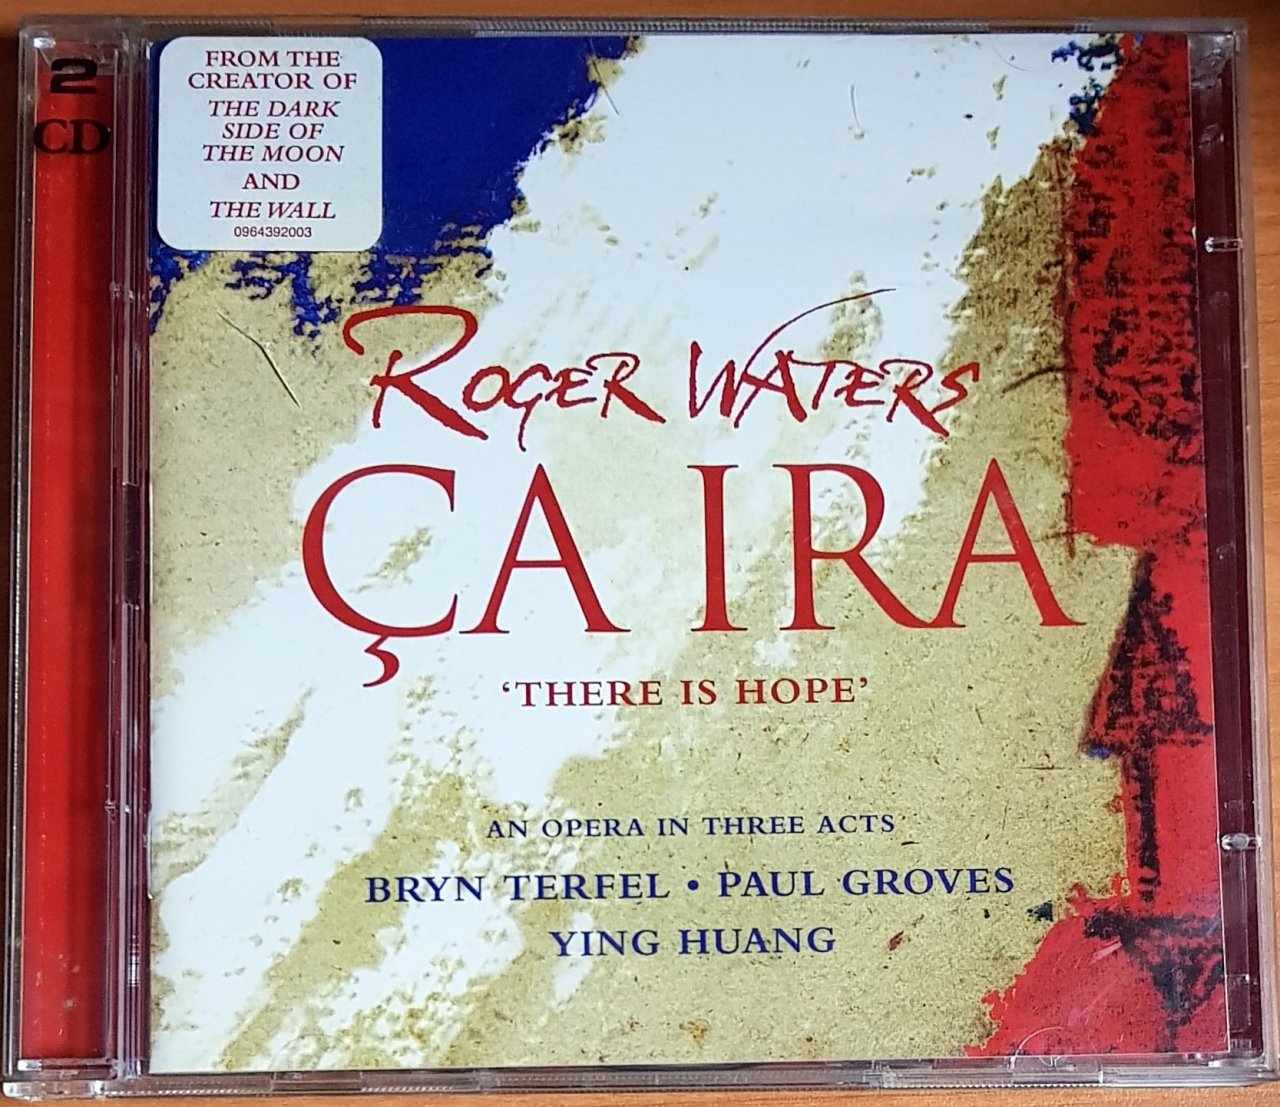 ROGER WATERS - ÇA IRA (2005) SONY CLASSICAL / COLUMBIA 2CD 2.EL